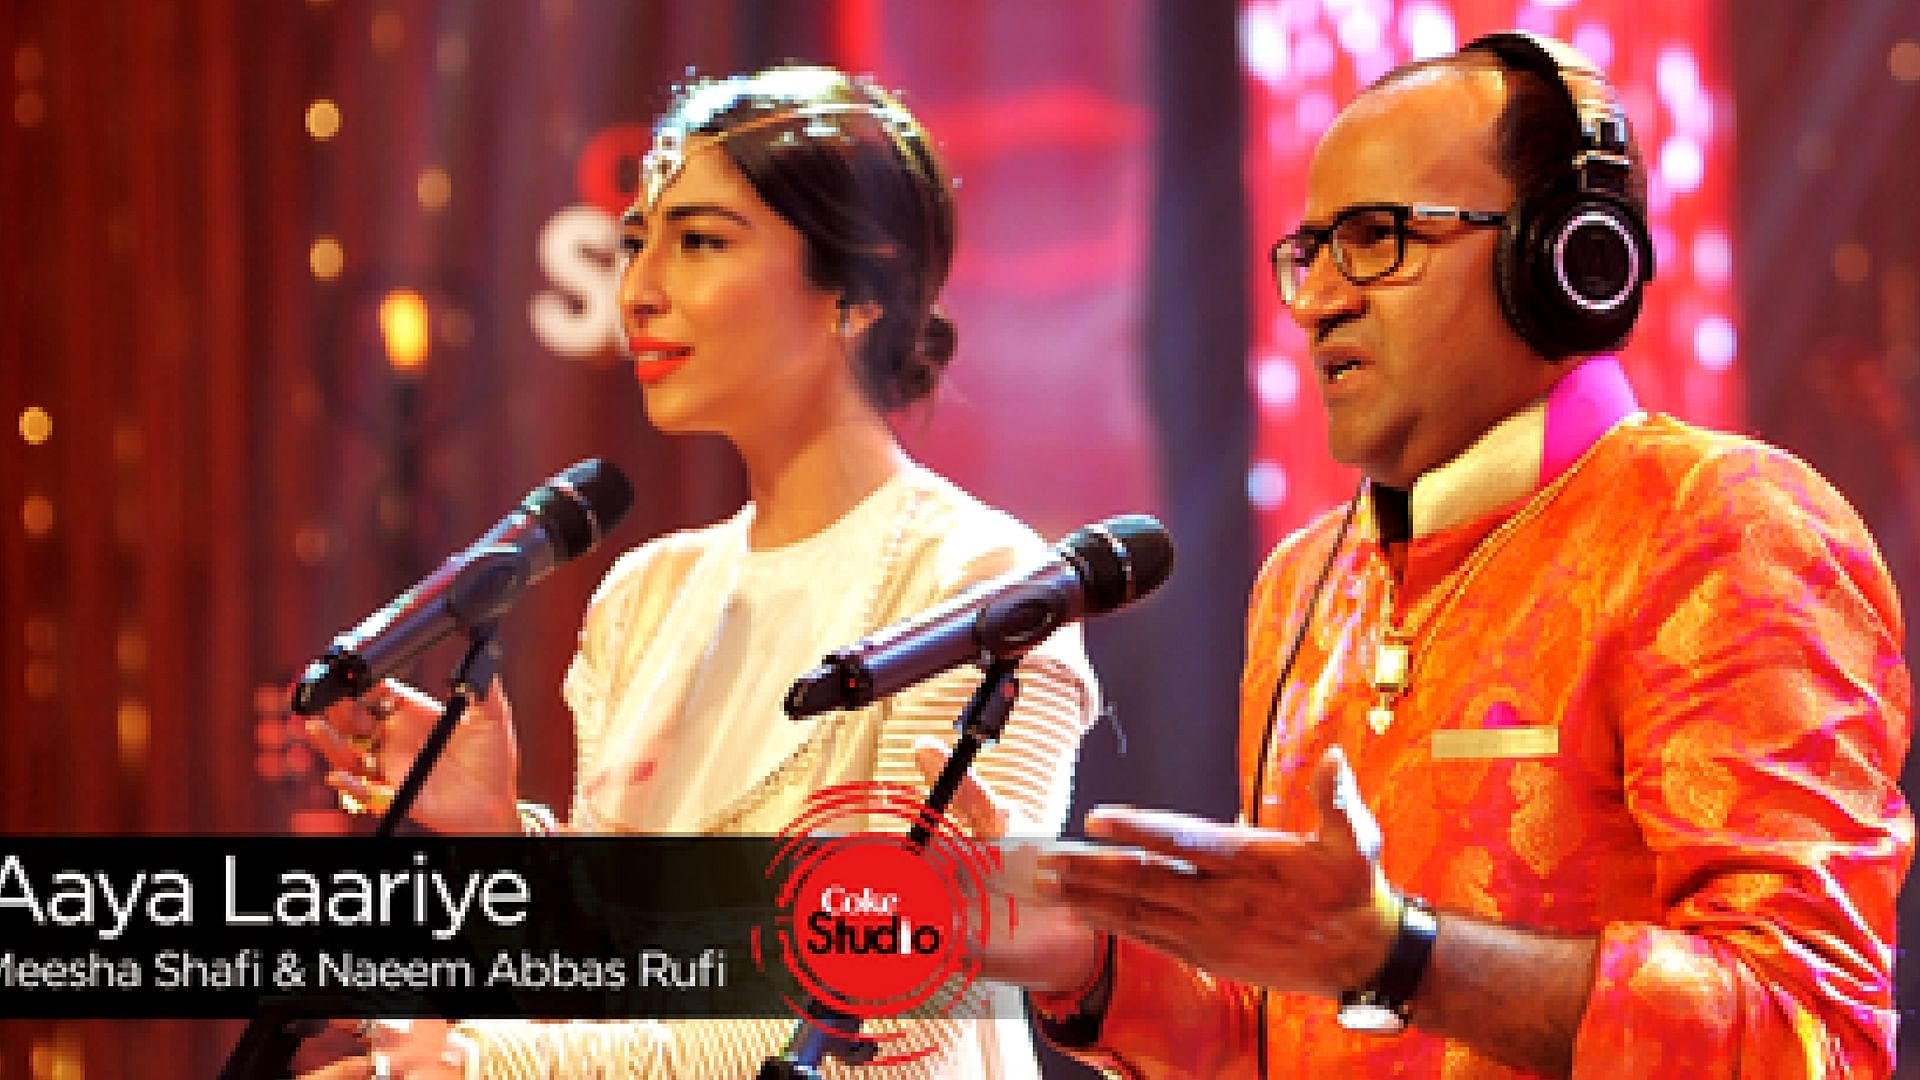 

Misha Shafi and Naeem Abbas Rufi during the performance. (Photo courtesy: YouTube grab)